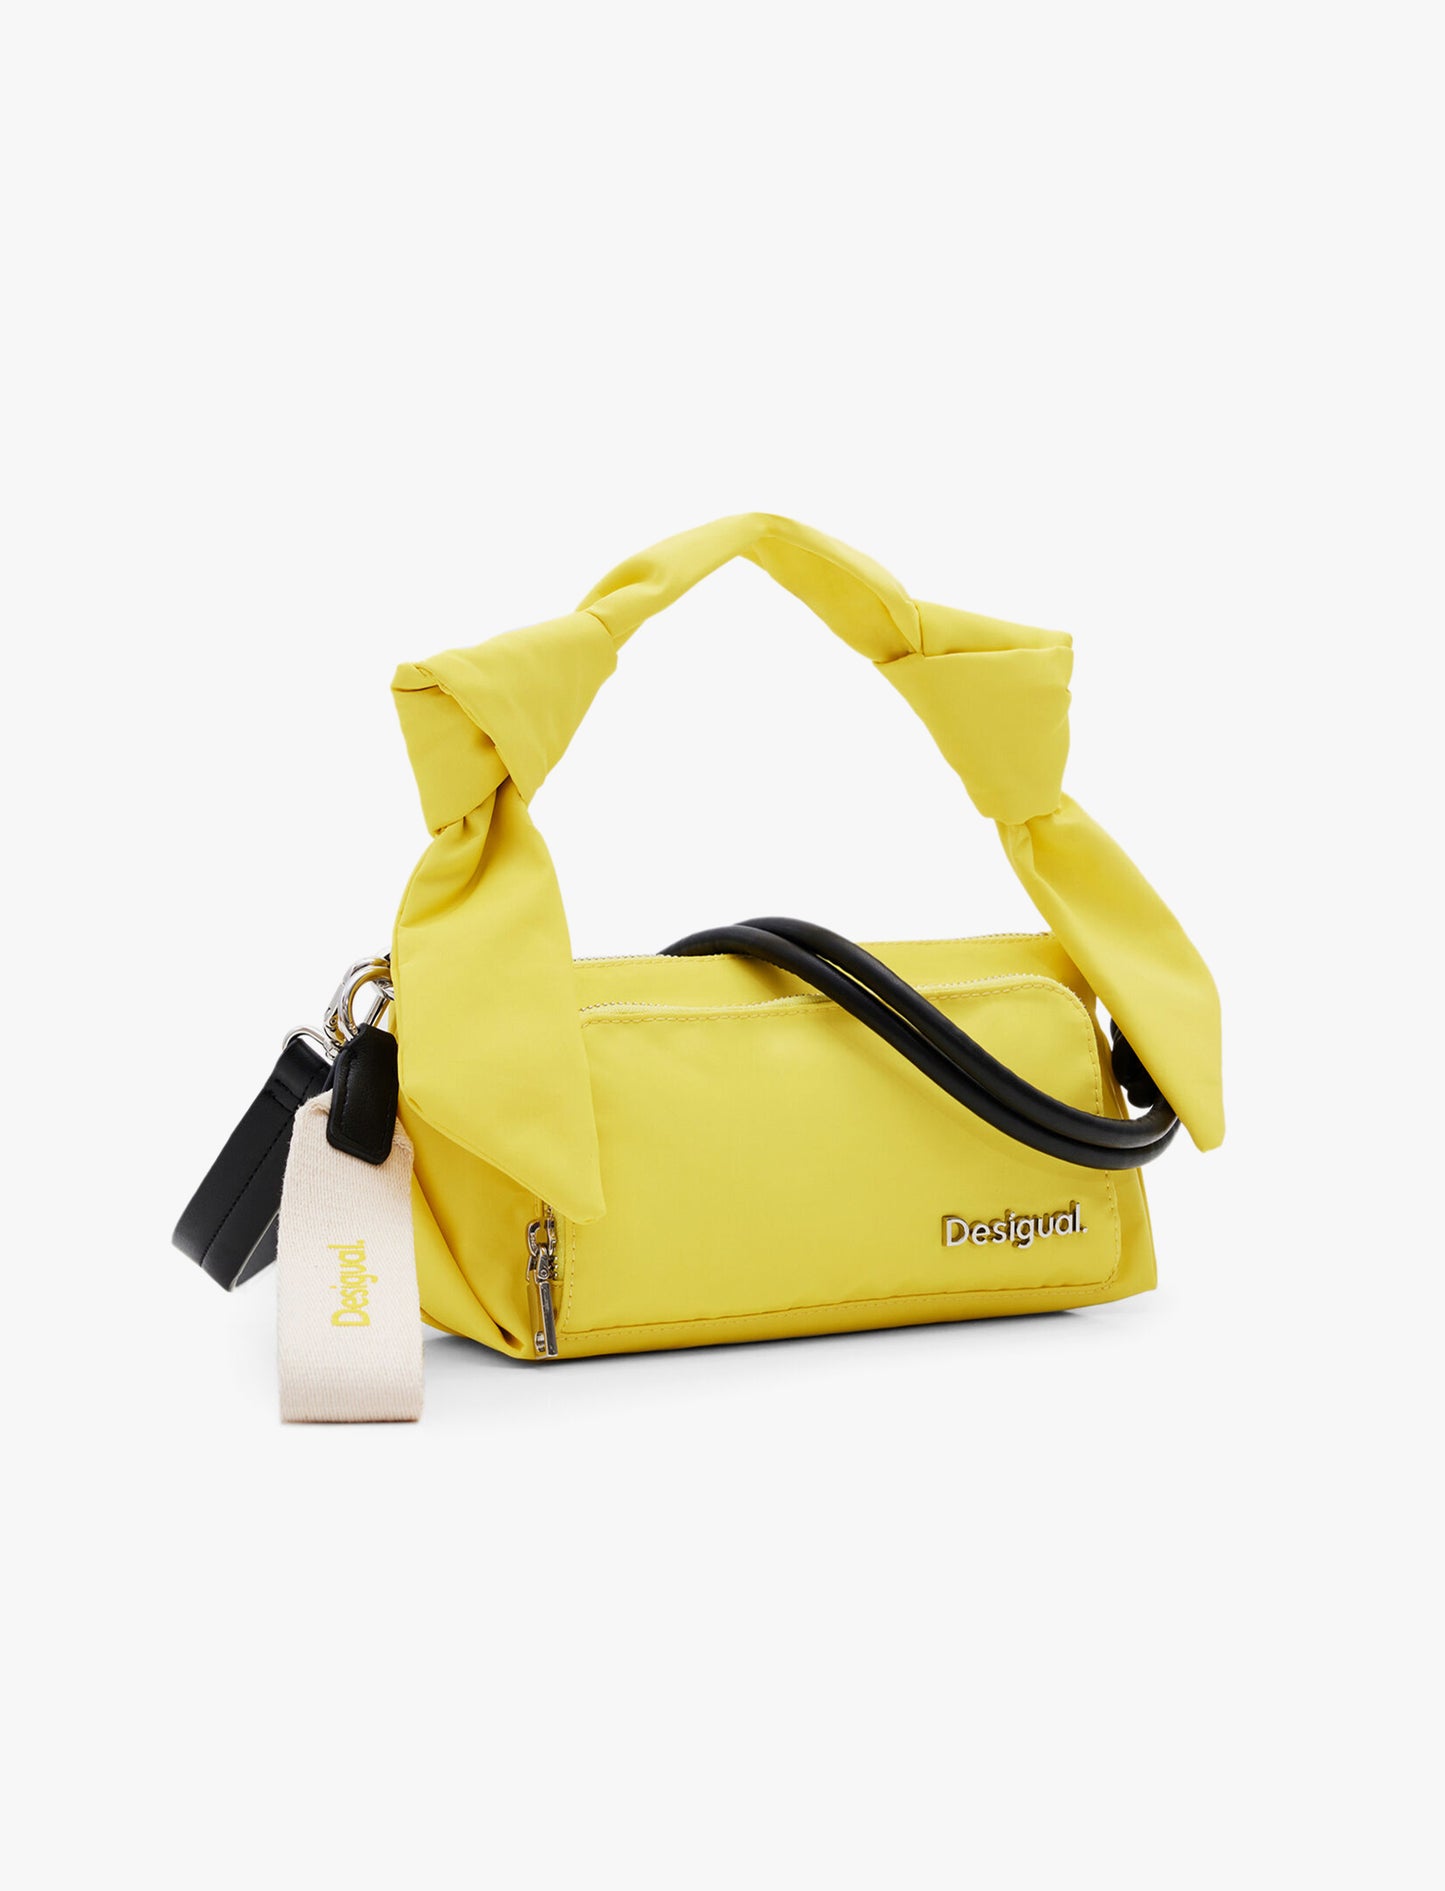 Desigual Bag Priori Urus - תיק קרוסבודי קטן בצבע צהוב